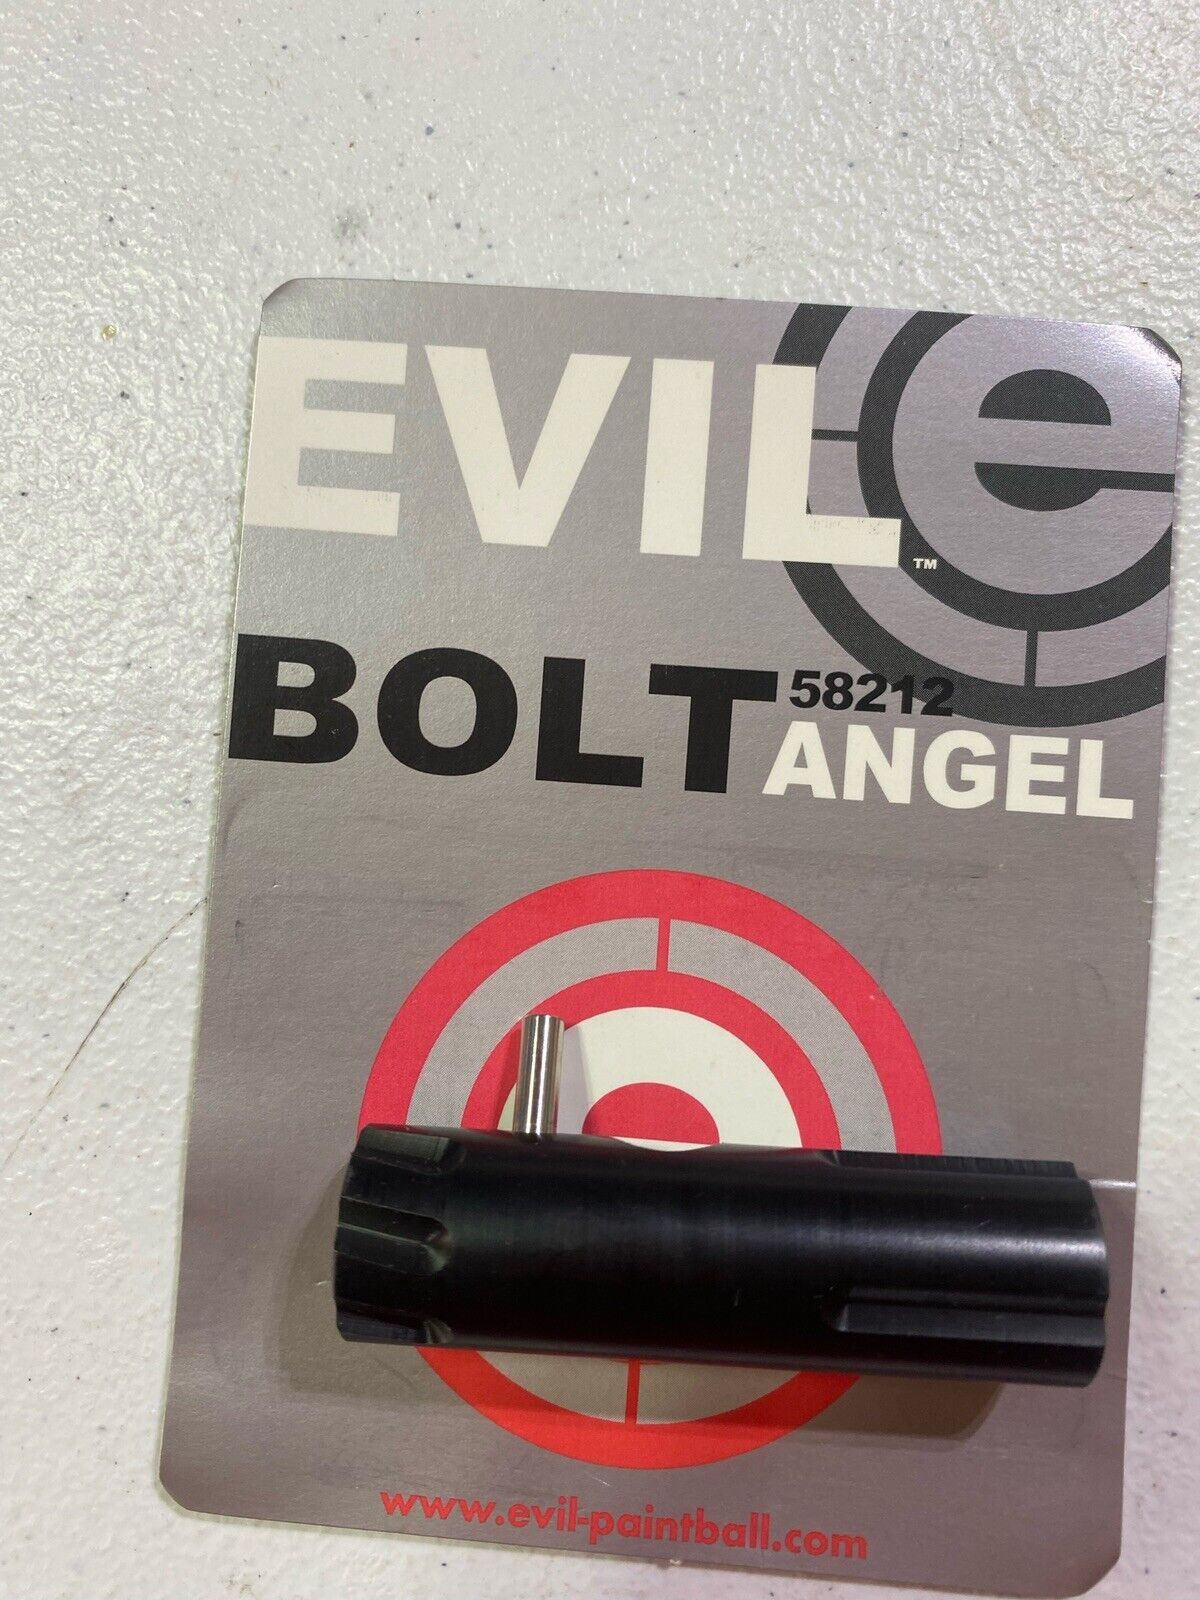 Evil Angel Bolt 58212 New Zero Friction Delrin Bolt Velocity 10-15 Fps